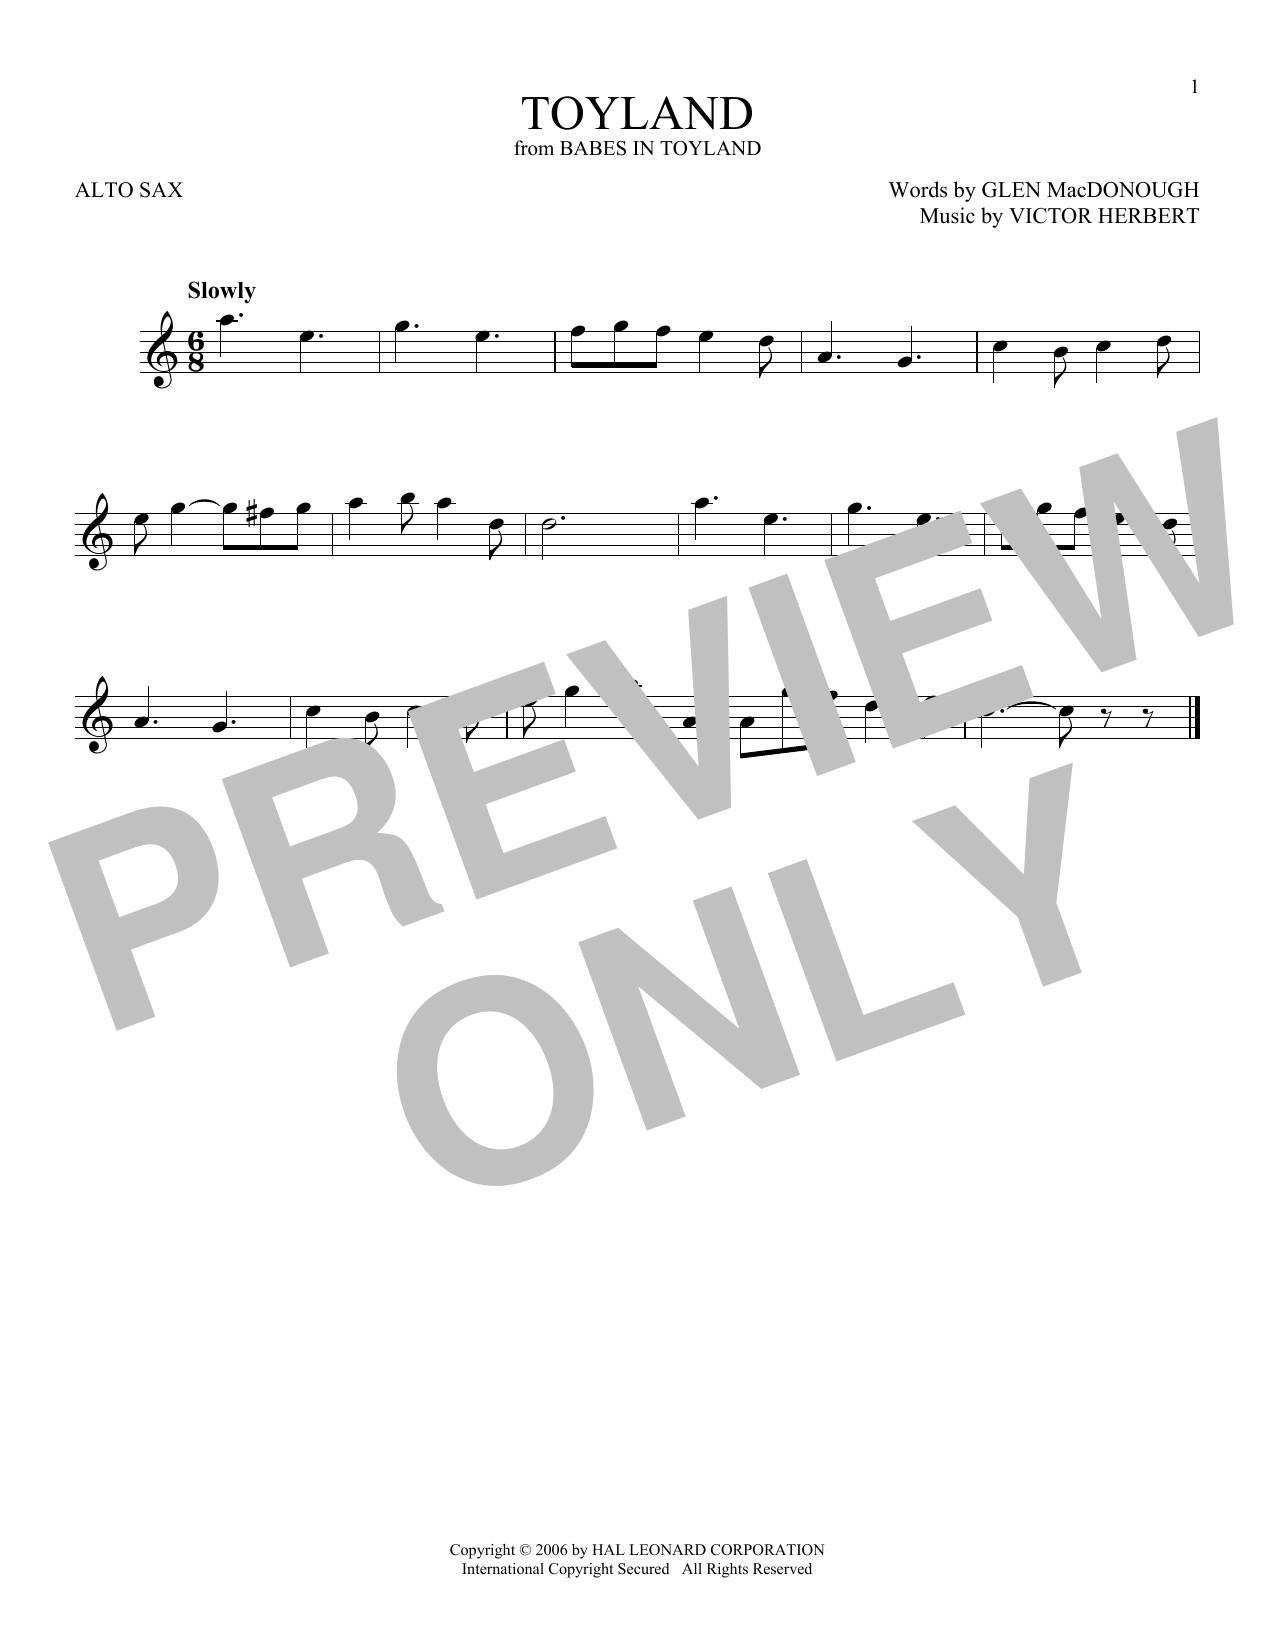 Victor Herbert Toyland Sheet Music Notes & Chords for Flute - Download or Print PDF